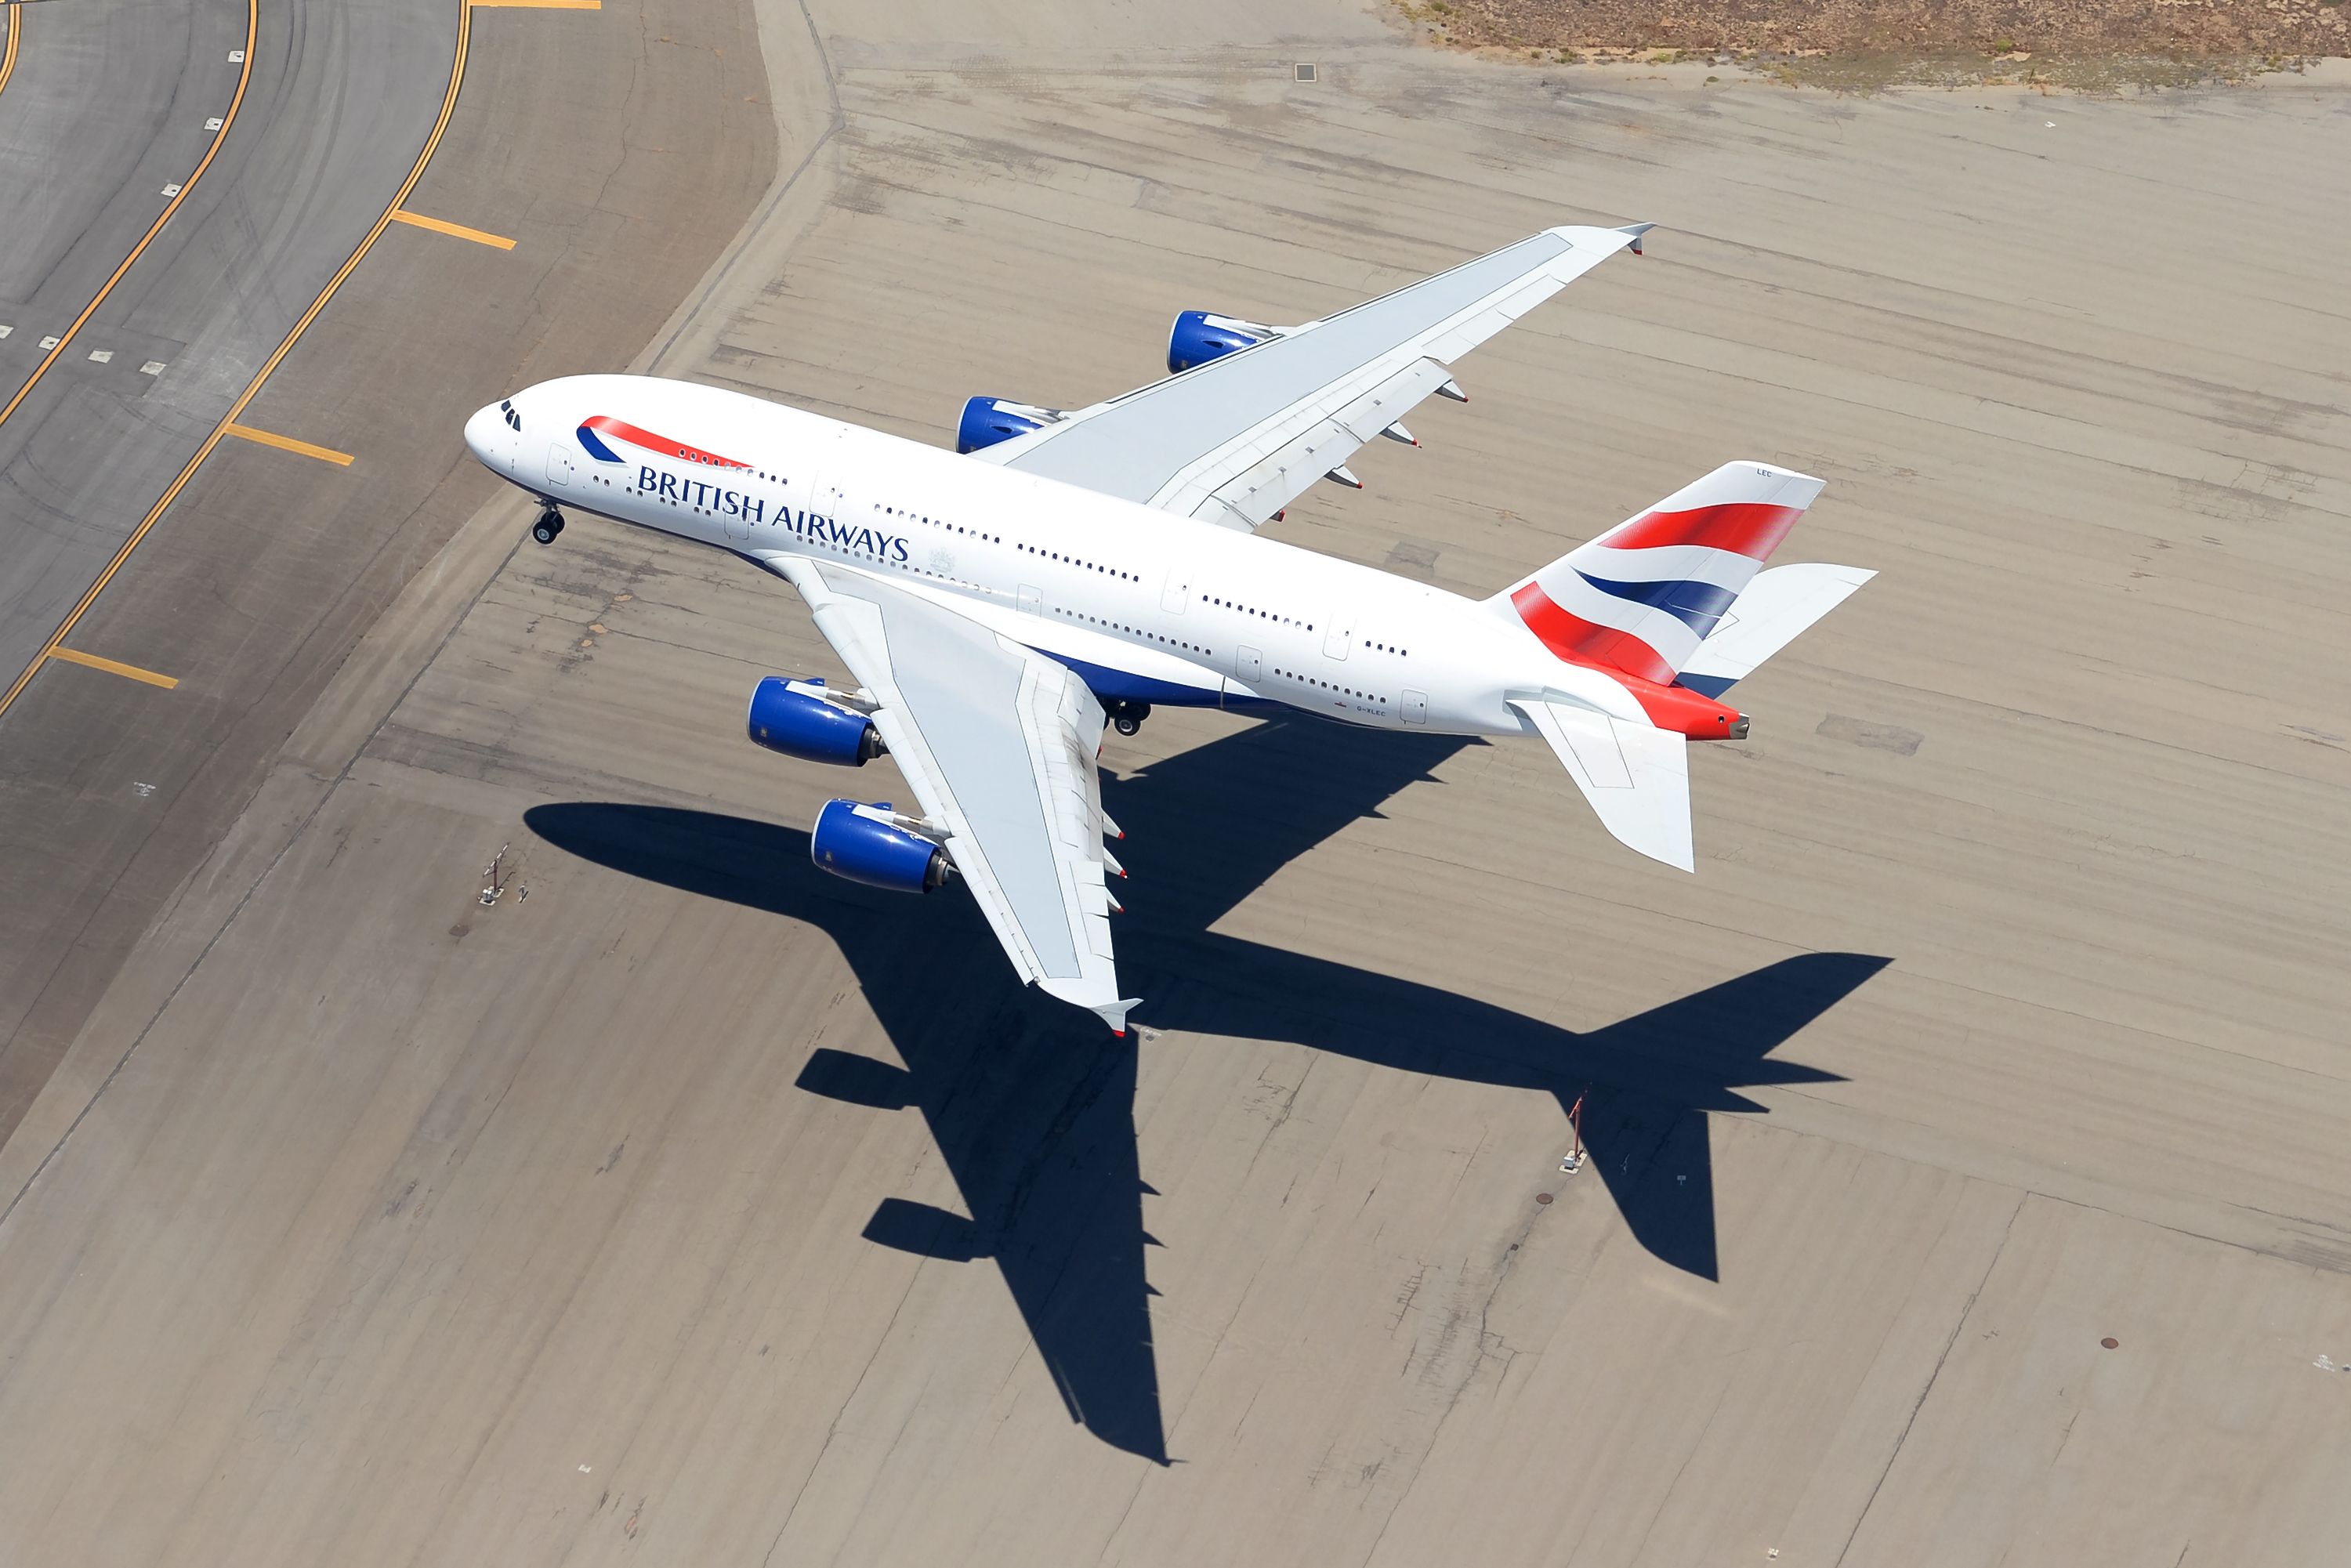 British Airways Airbus A380 landing at Los Angeles International Airport